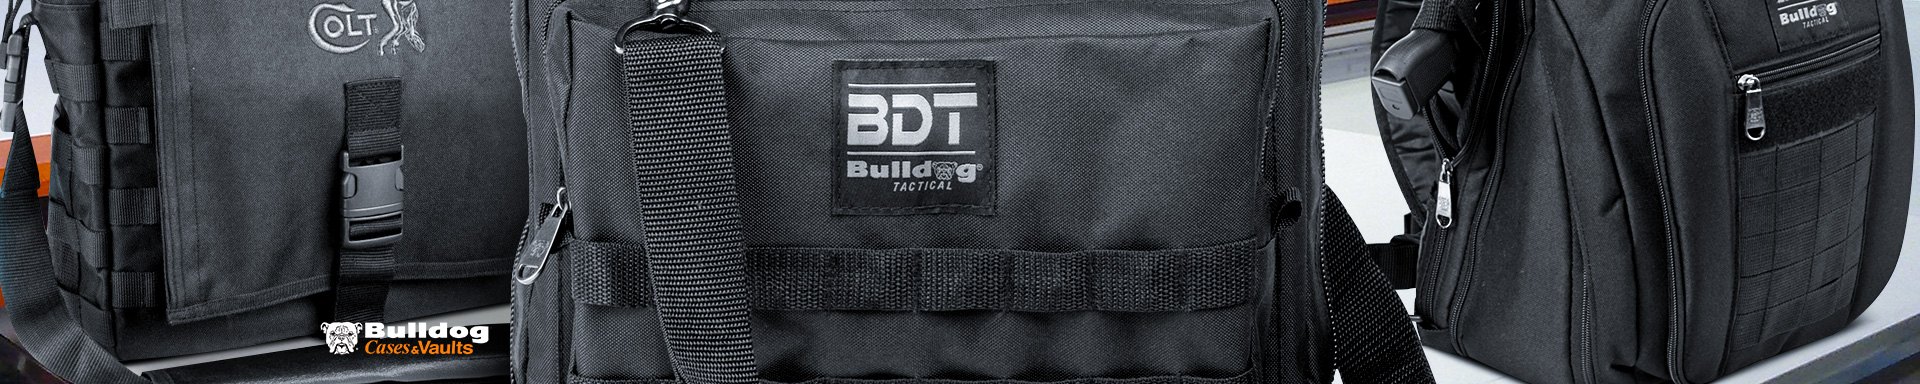 Bulldog Cases & Vaults Holsters & Belts